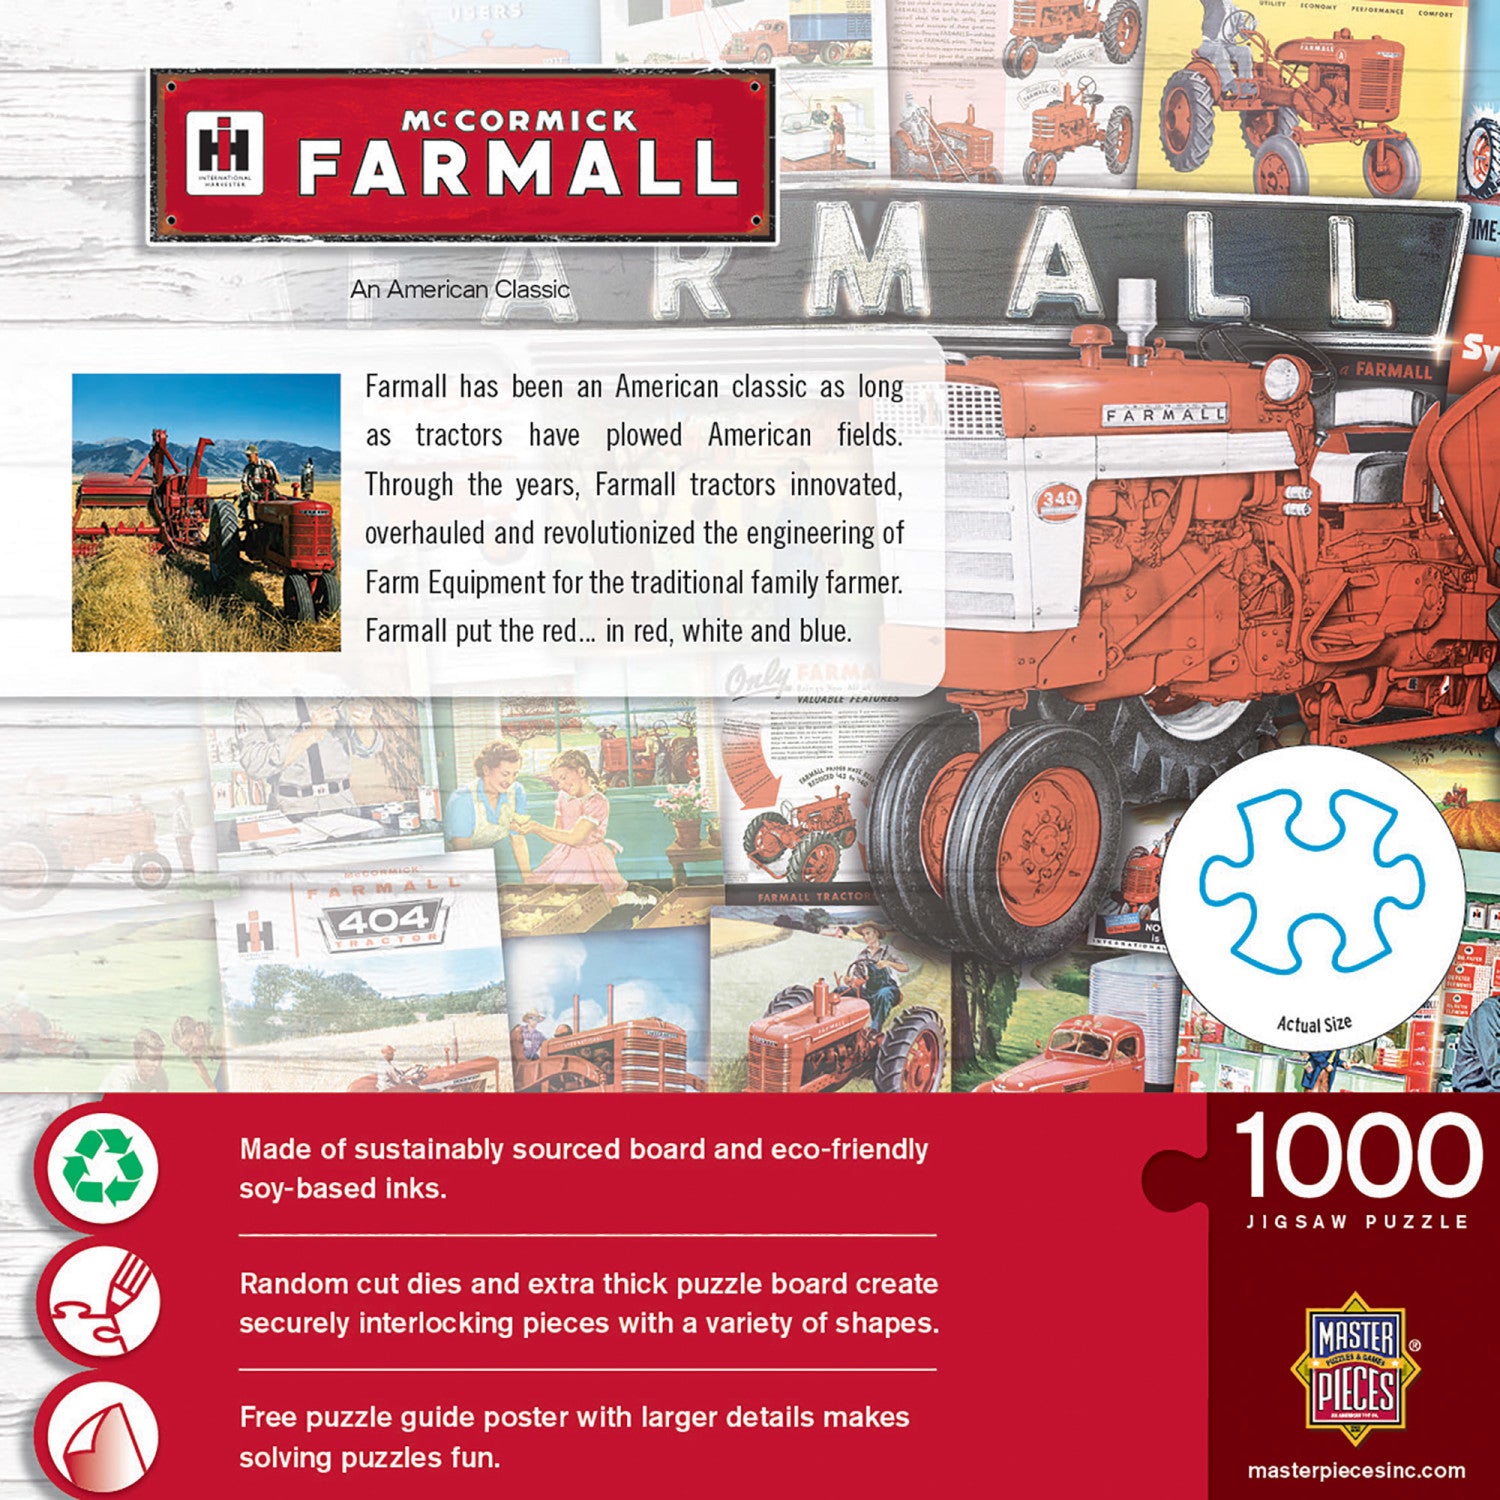 Farmall - An American Classic 1000 Piece Jigsaw Puzzle